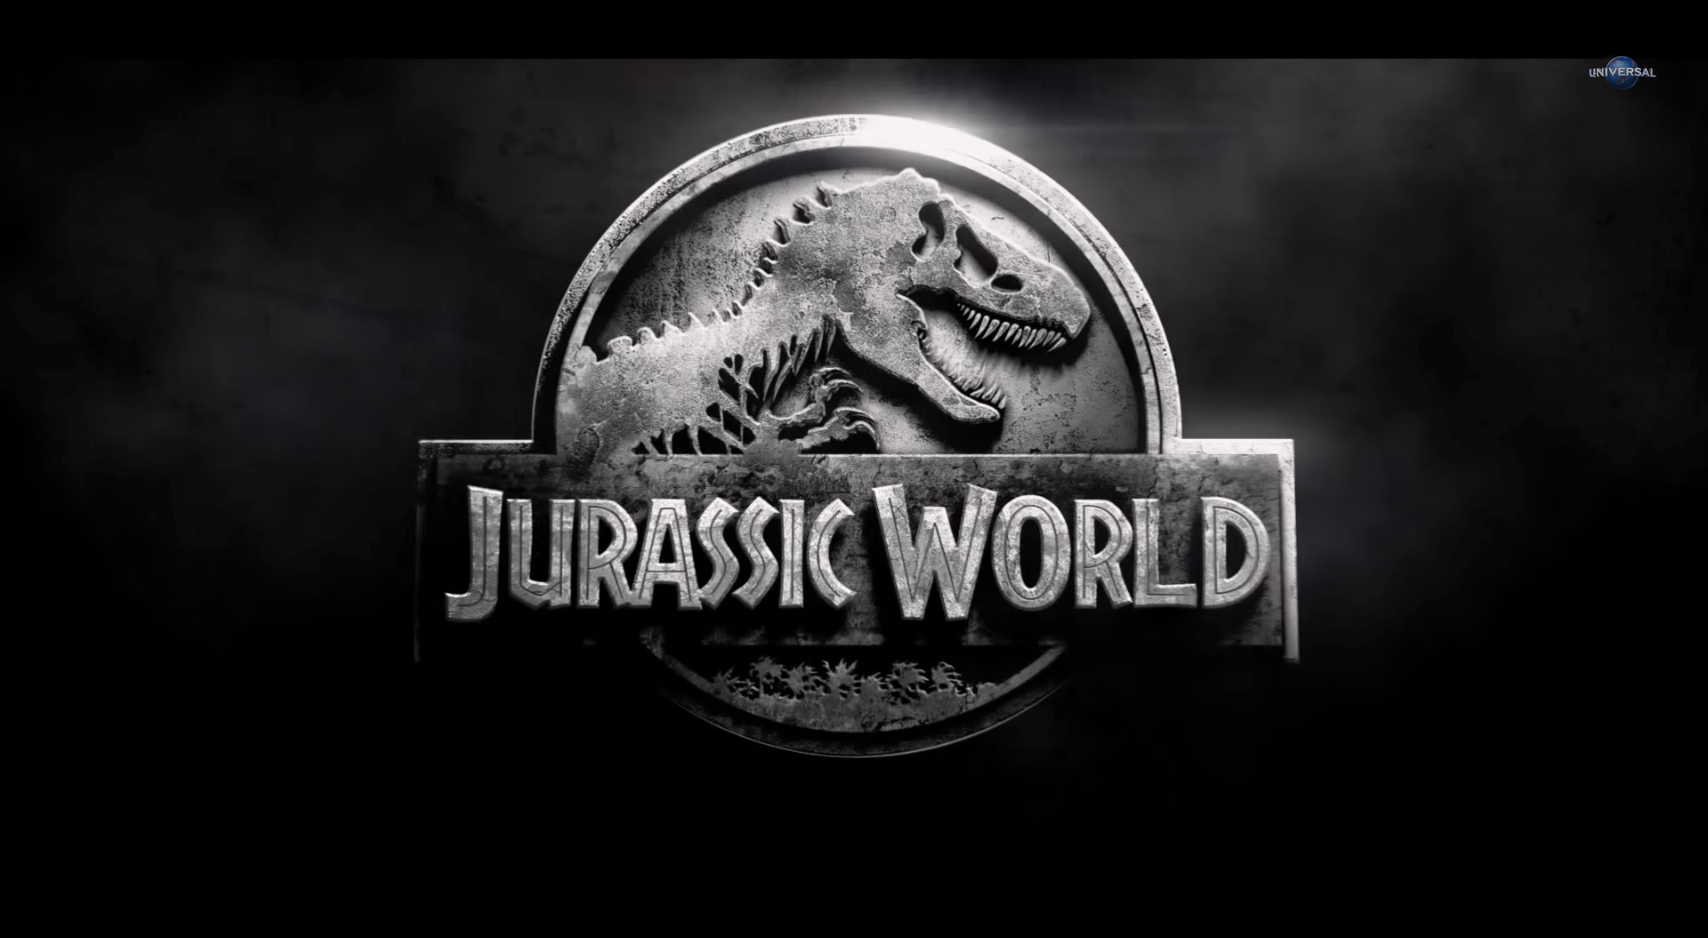 Jurassic World teaser trailer - Fonts In Use